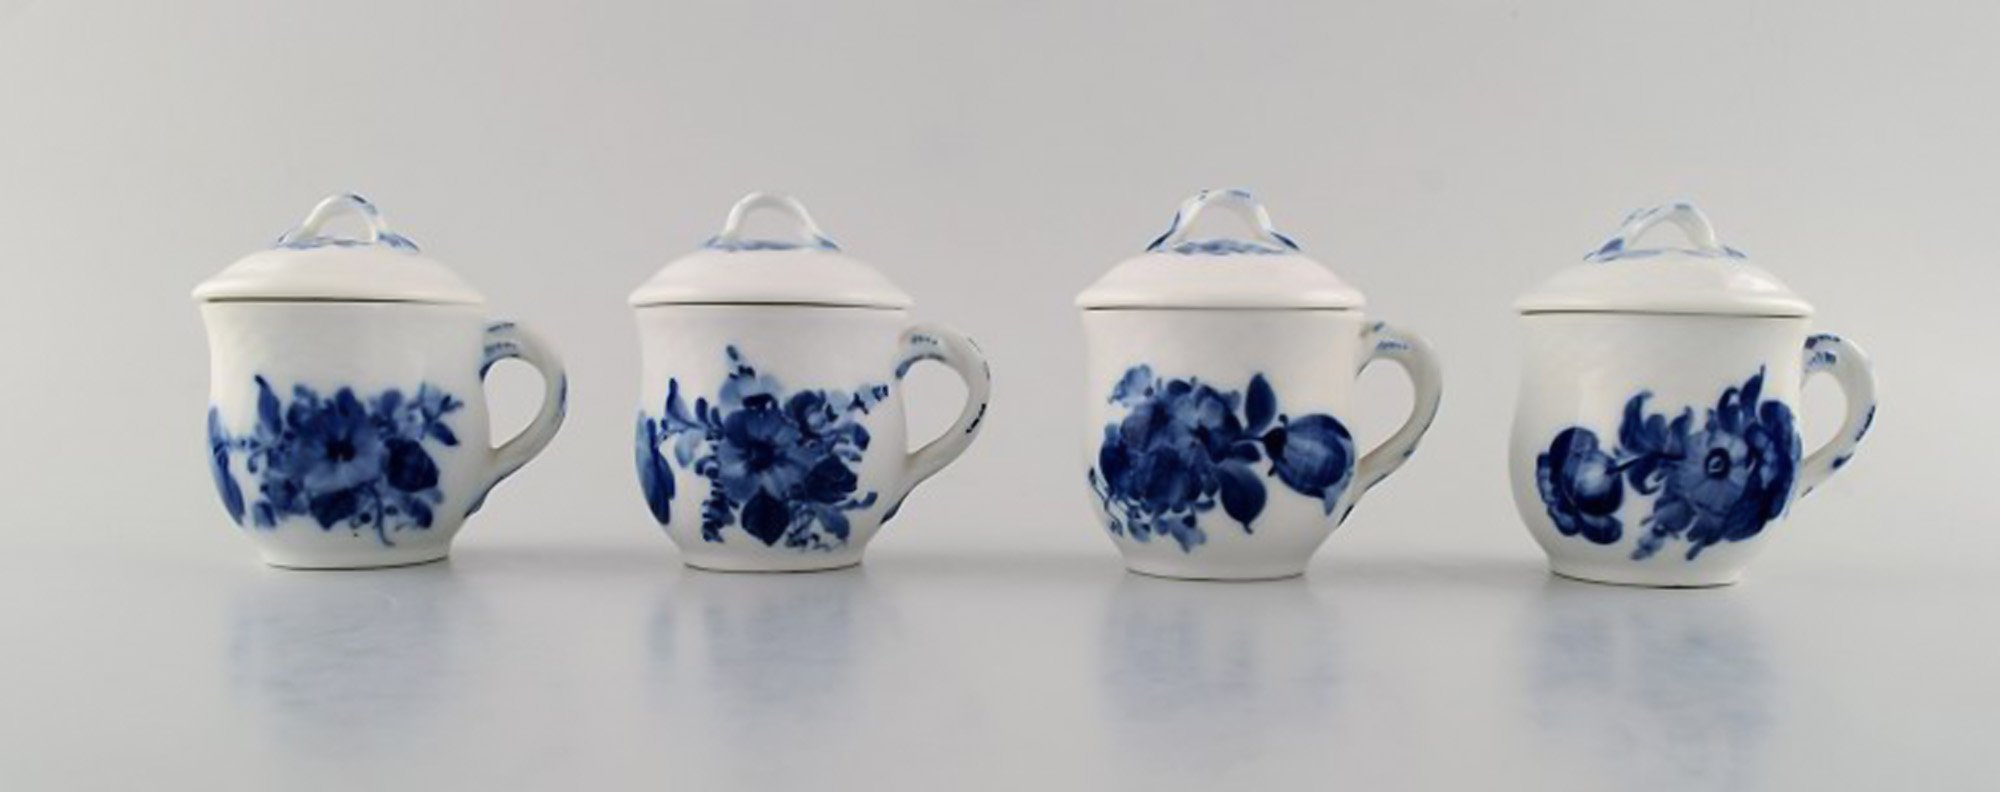 Blue Flower Braided Cup / Vase From Royal Copenhagen.